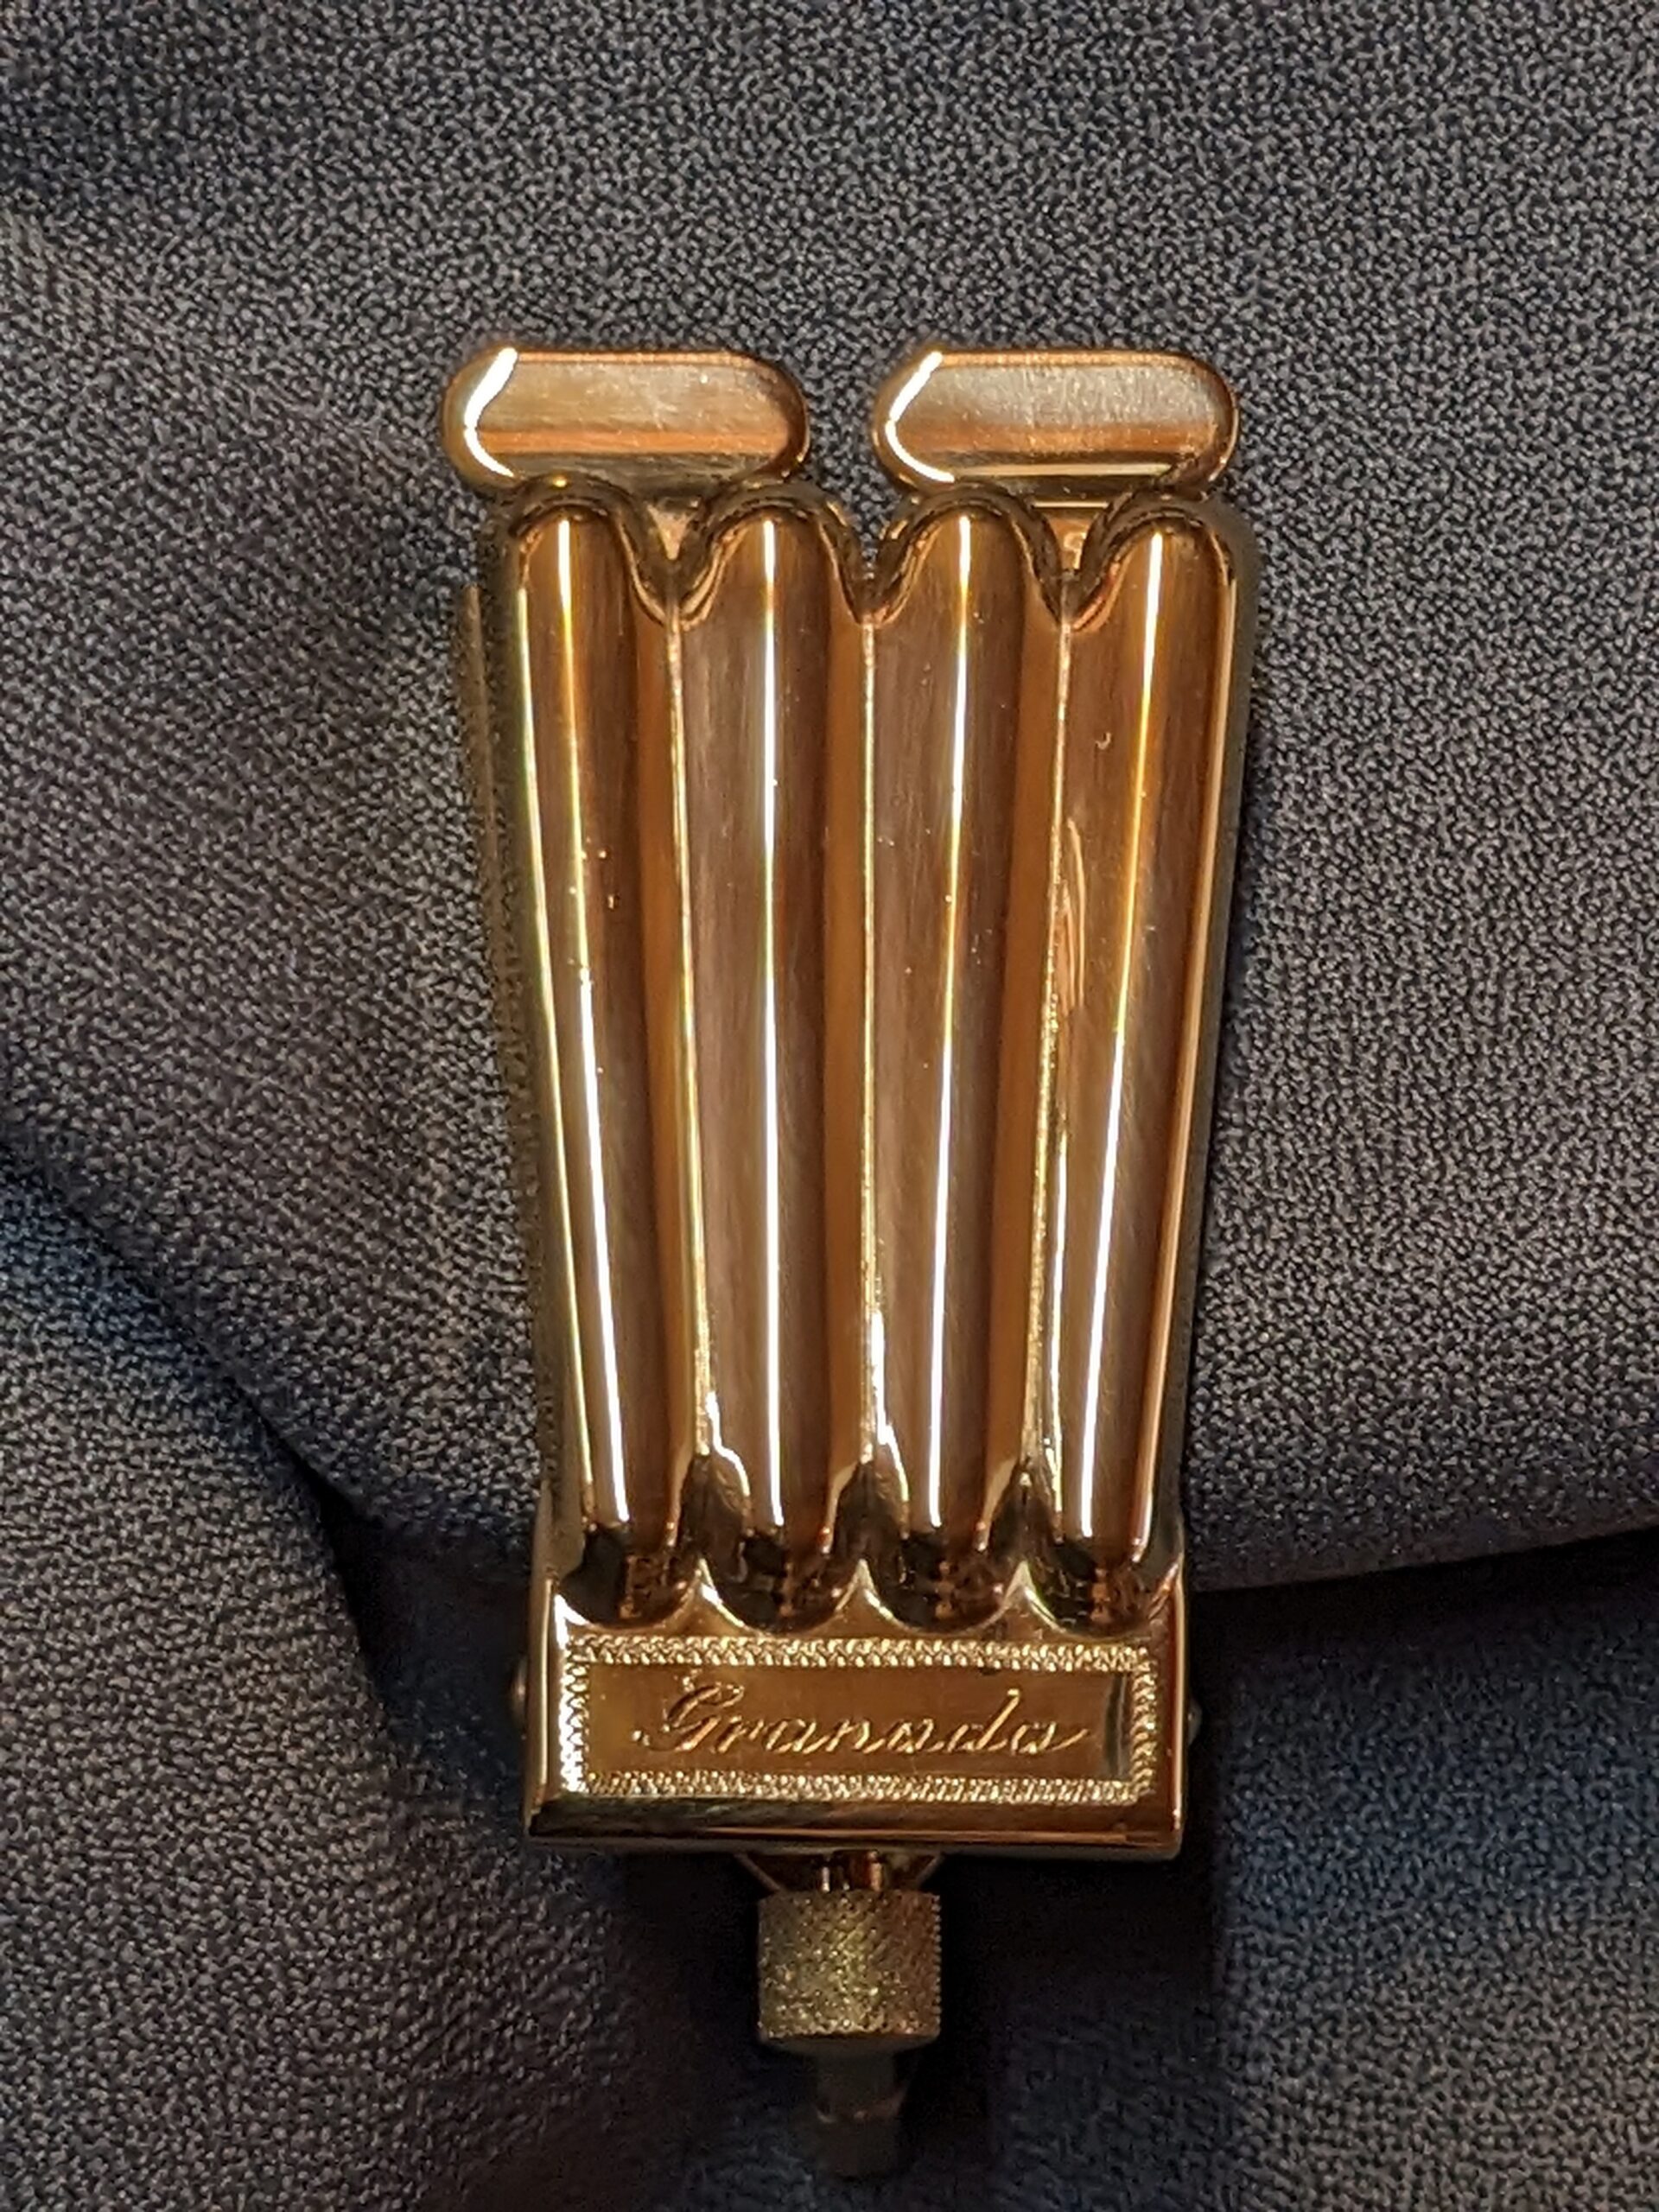 4-Hump Gold Engraved “Granada” Product